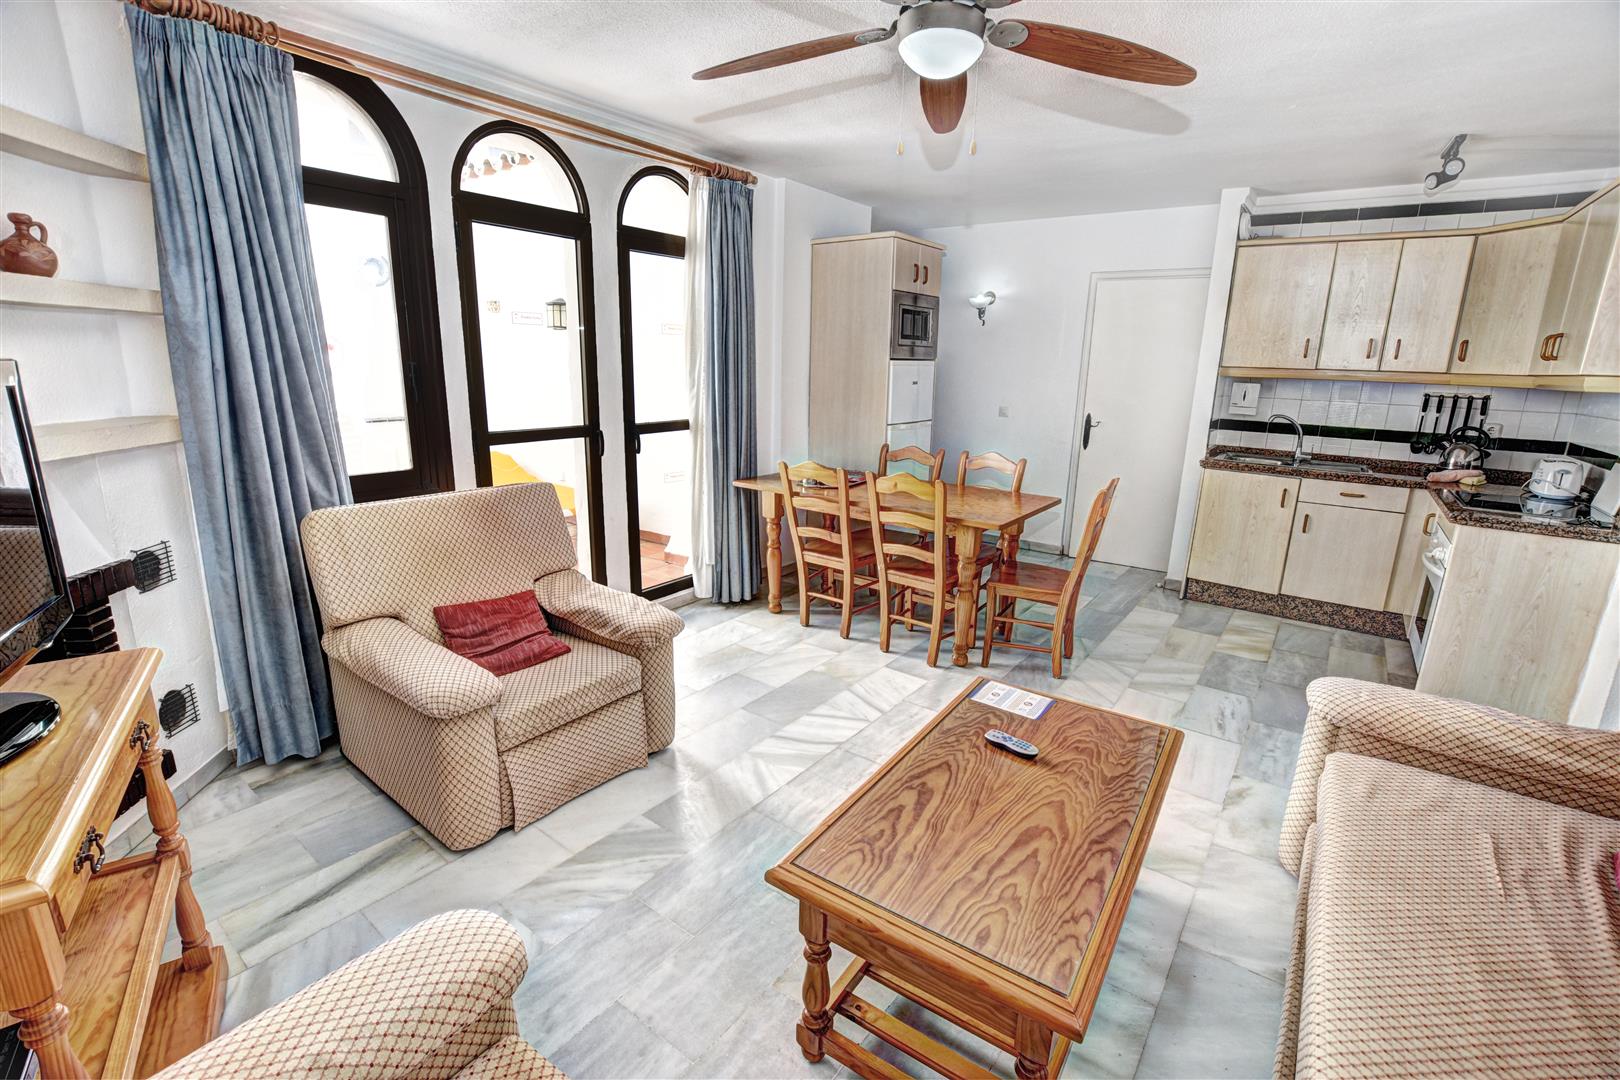 2 bed apartment for sale Pueblo Evita with 2 terraces - lounge